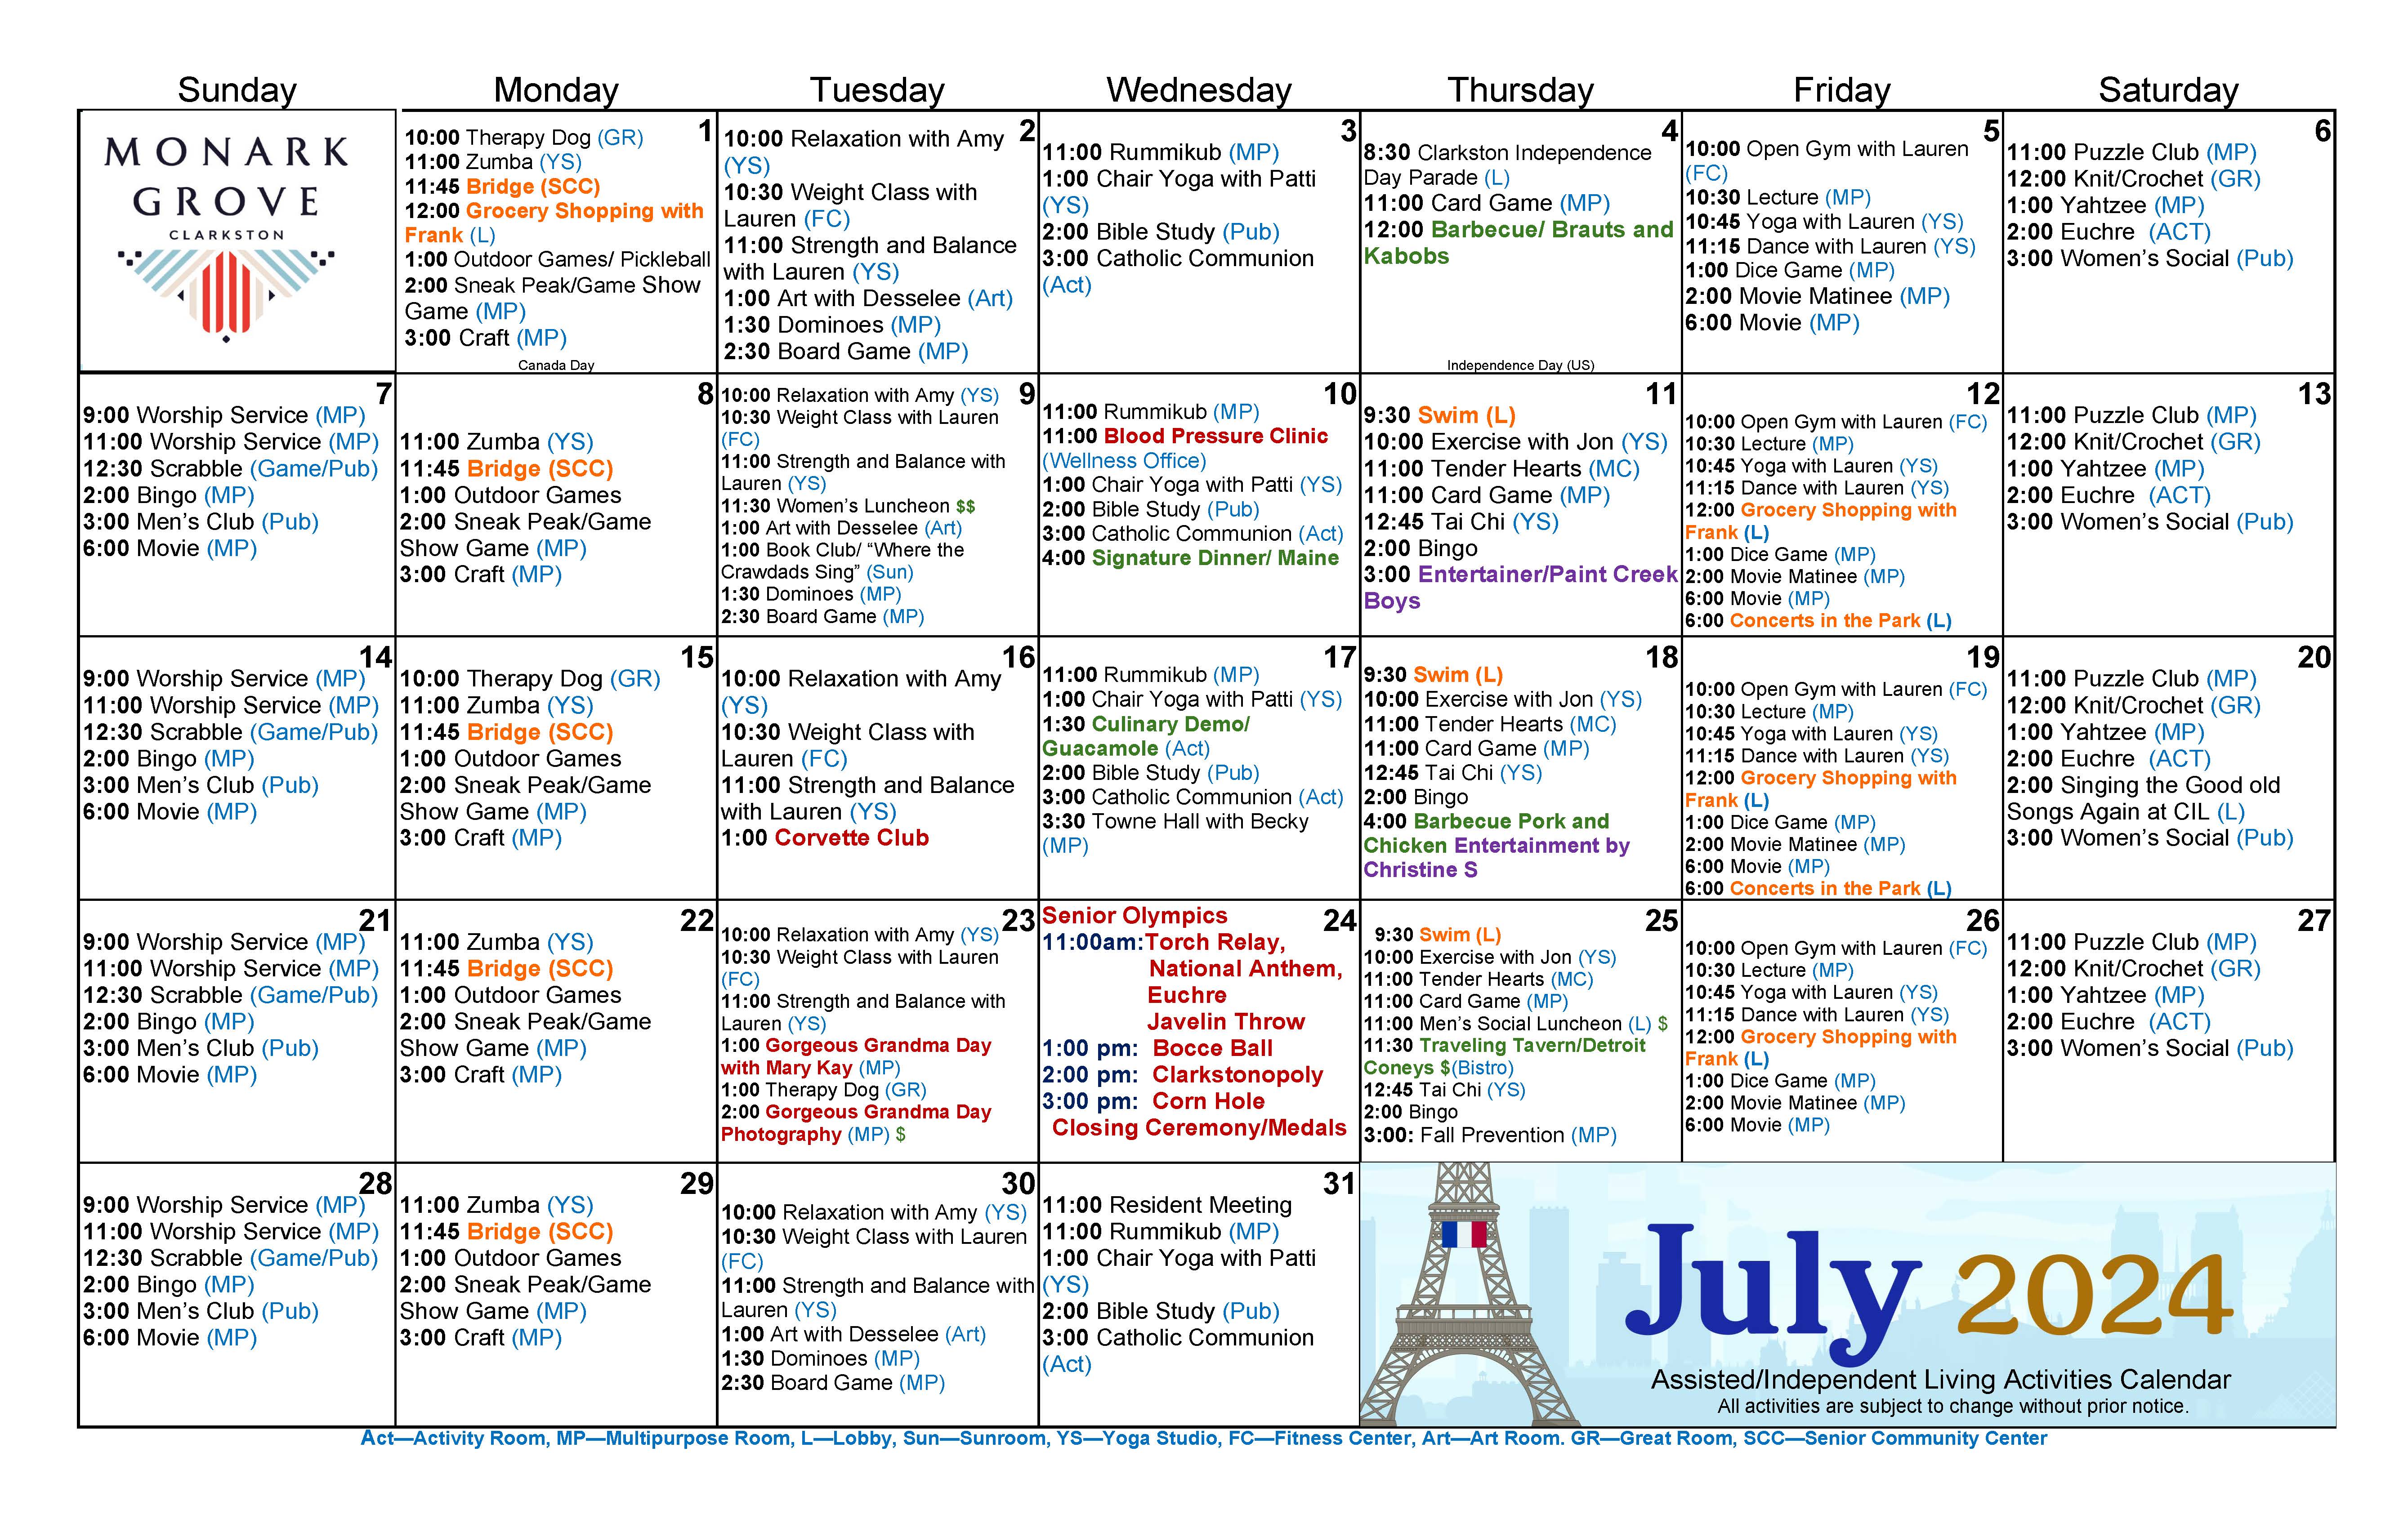 Monark Grove July Calendar